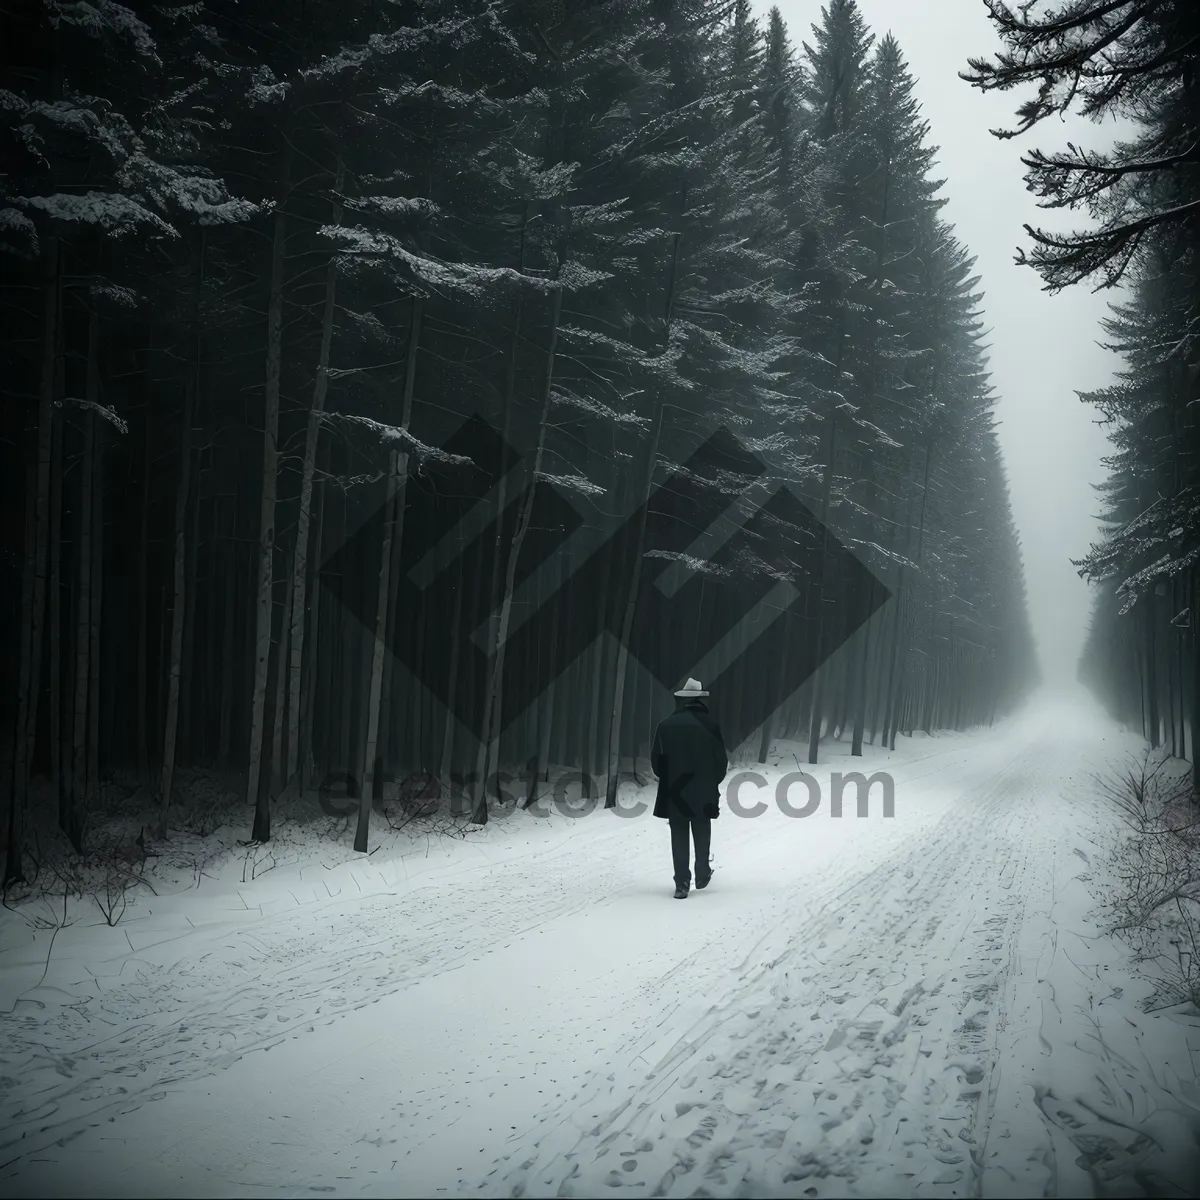 Picture of Winter Wonderland: Frozen Forest Landscape